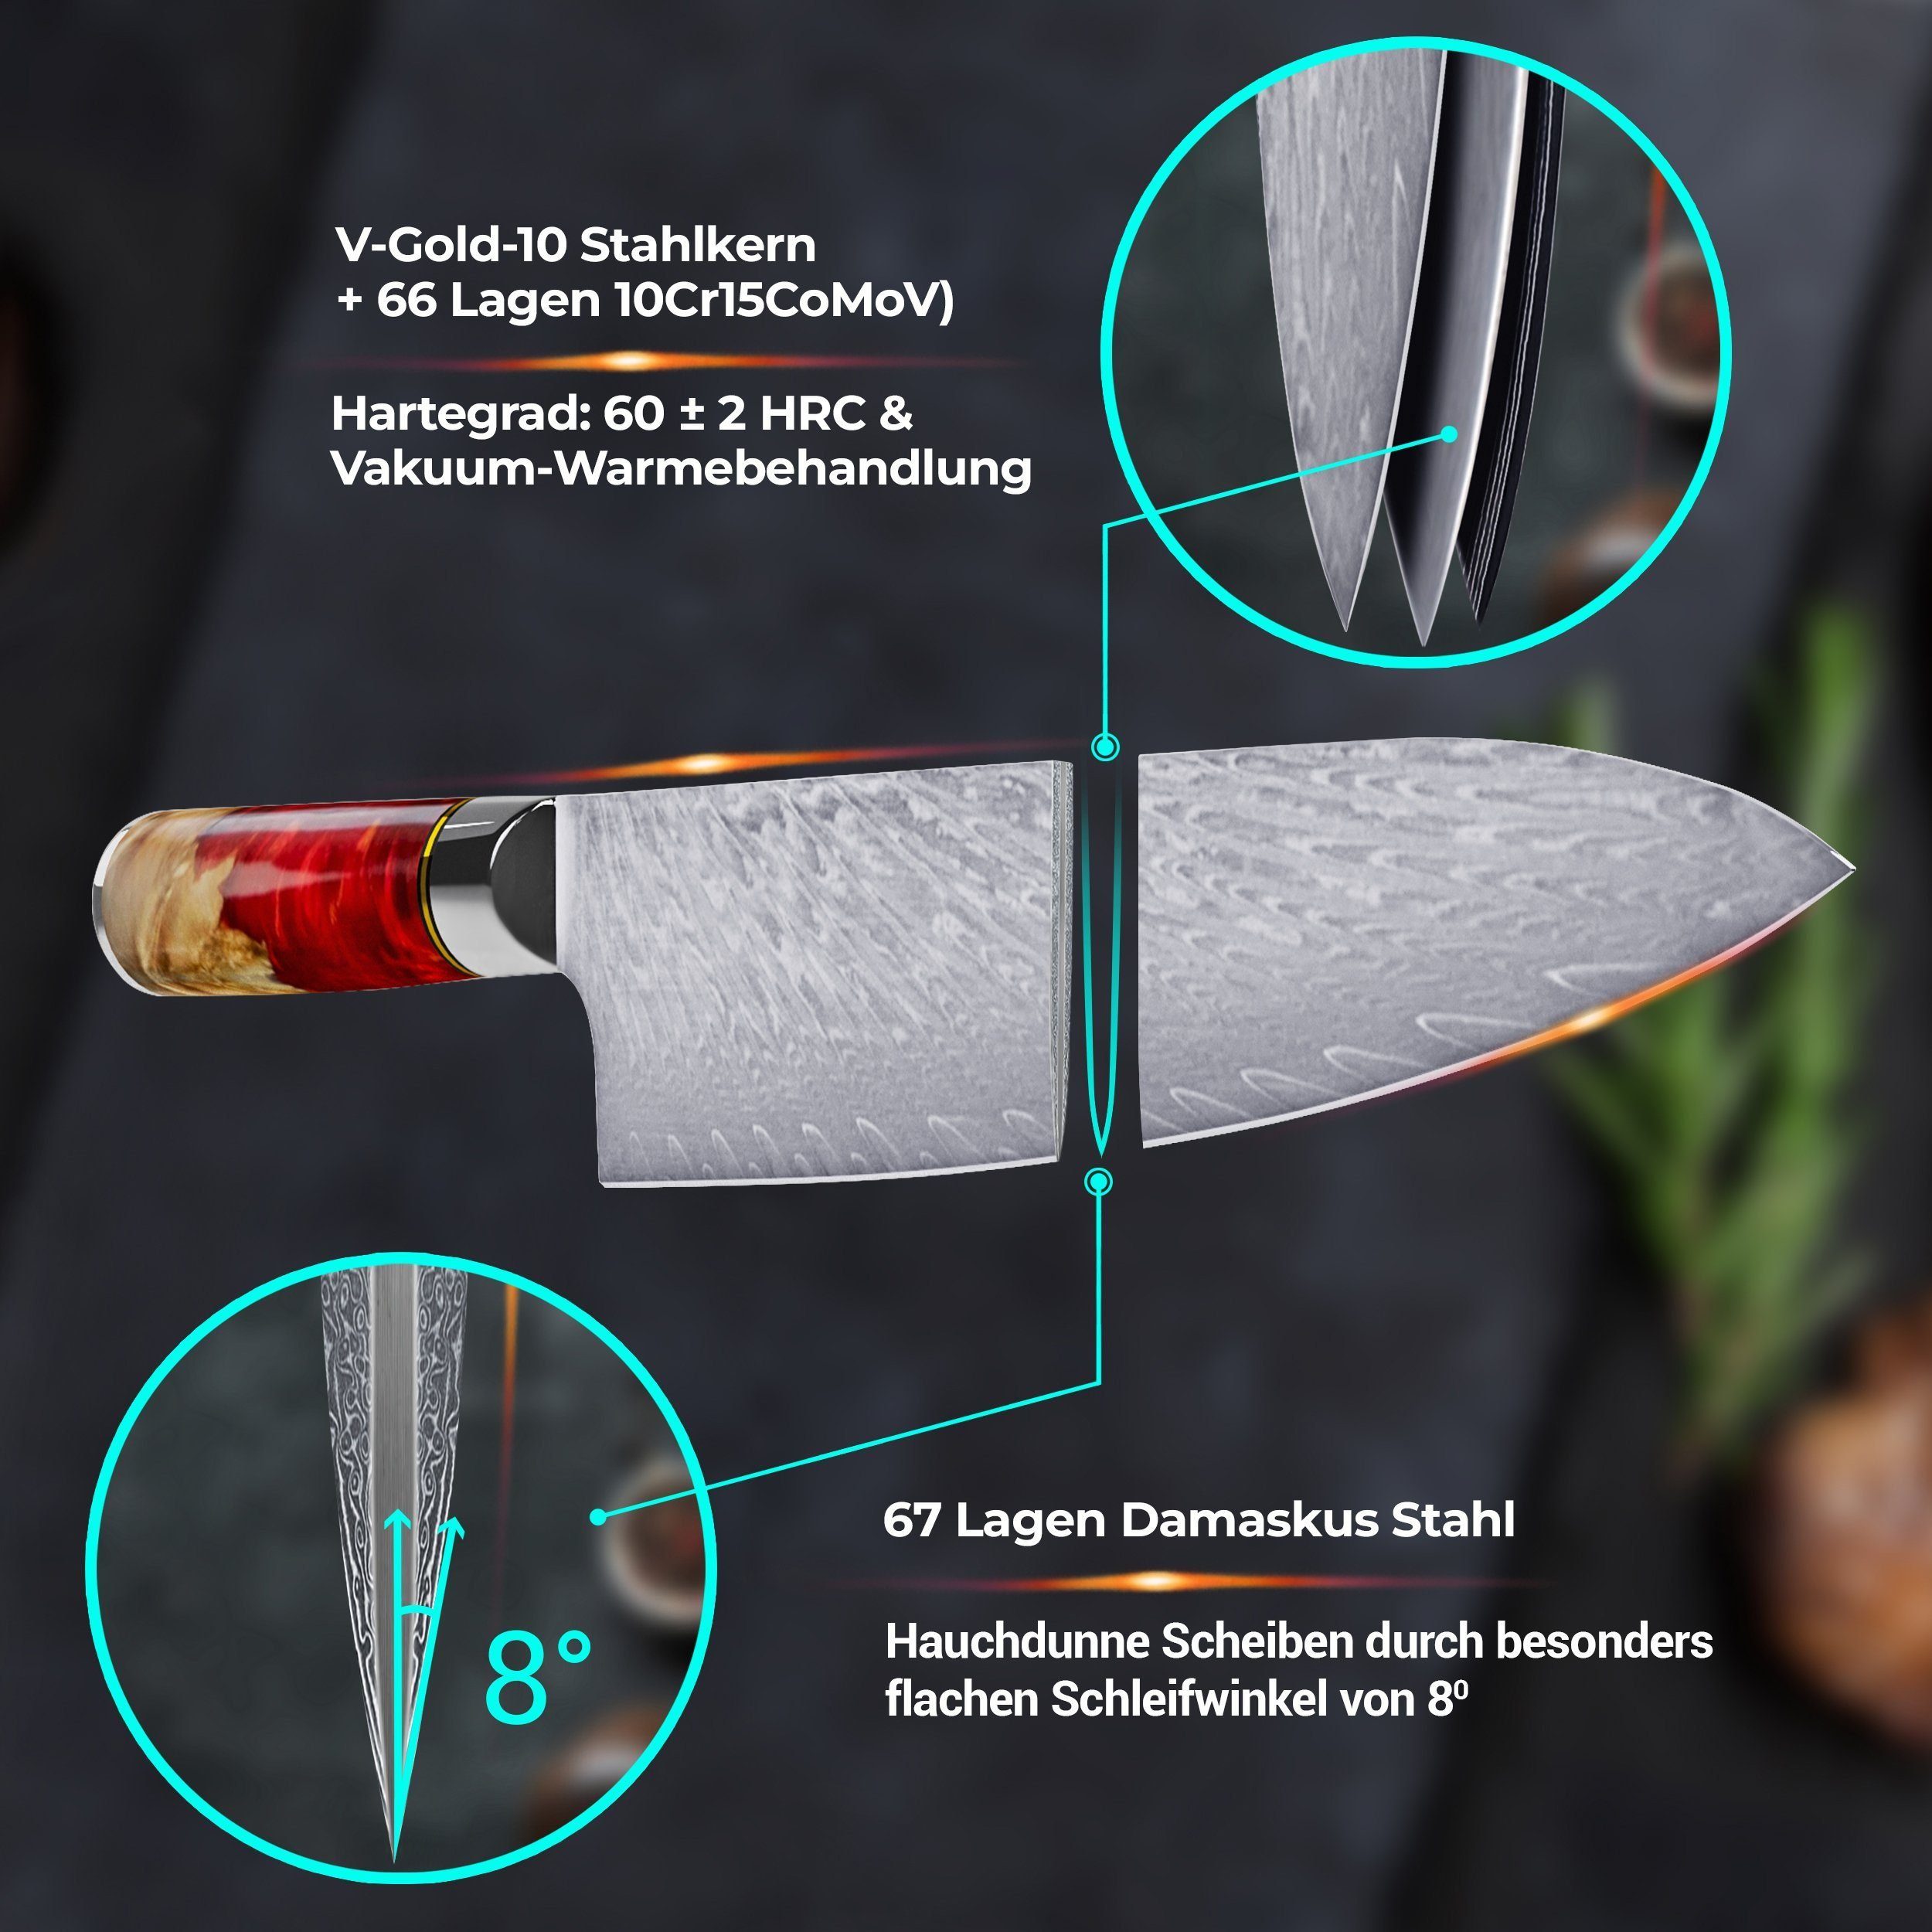 Line Messer Ruby 6-tlg), Set, Damastmesser Damaszener Küchenmesser Calisso (Advanced Messer-Set Messerset